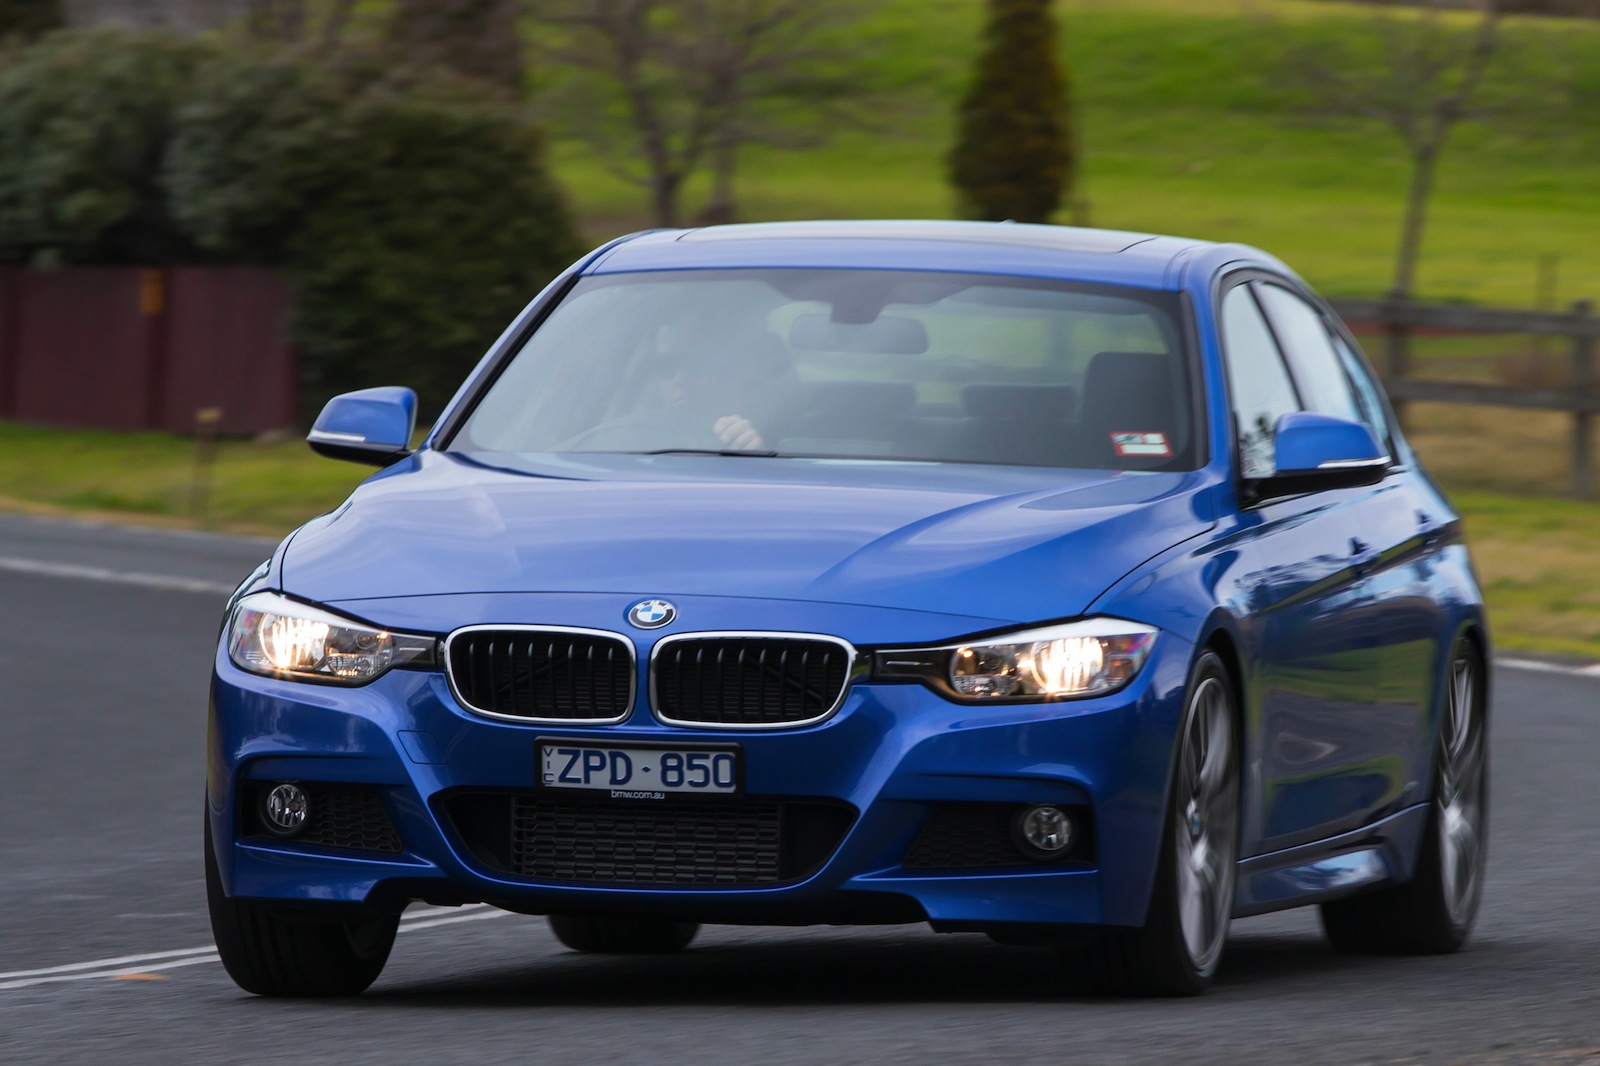 2014 BMW 316i M Sport Review by Car Advice - autoevolution1600 x 1066